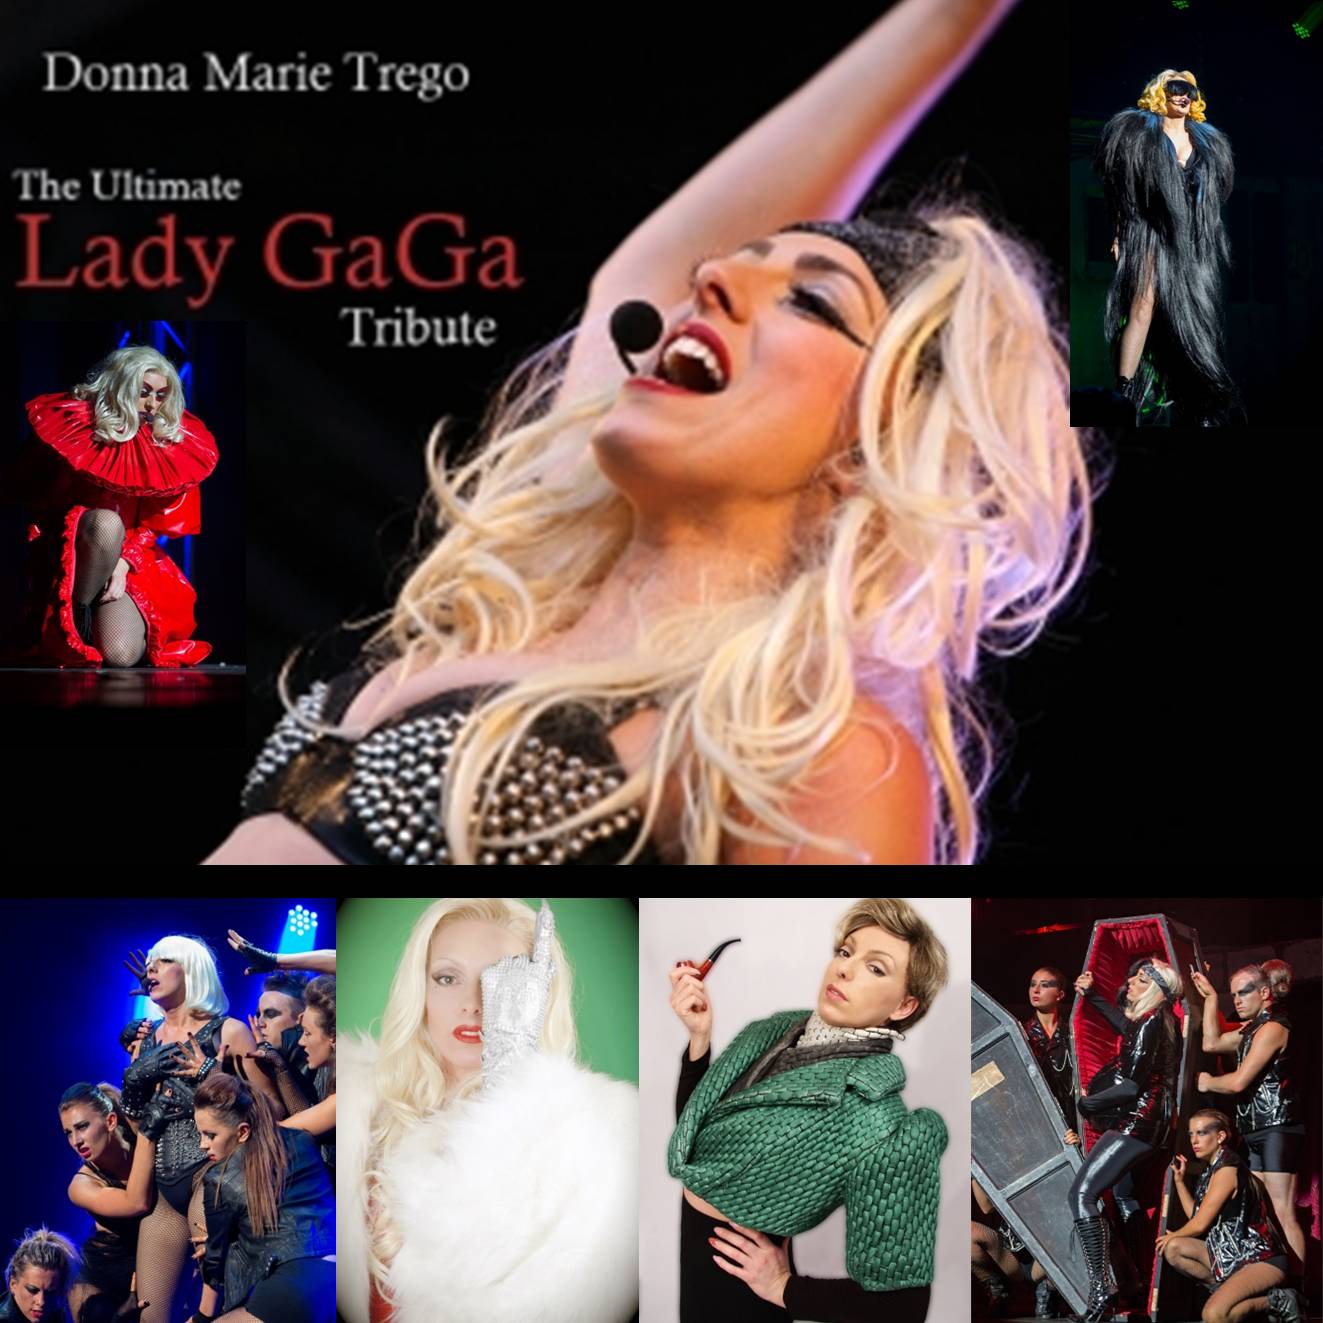 Donna Marie as Lady Gaga